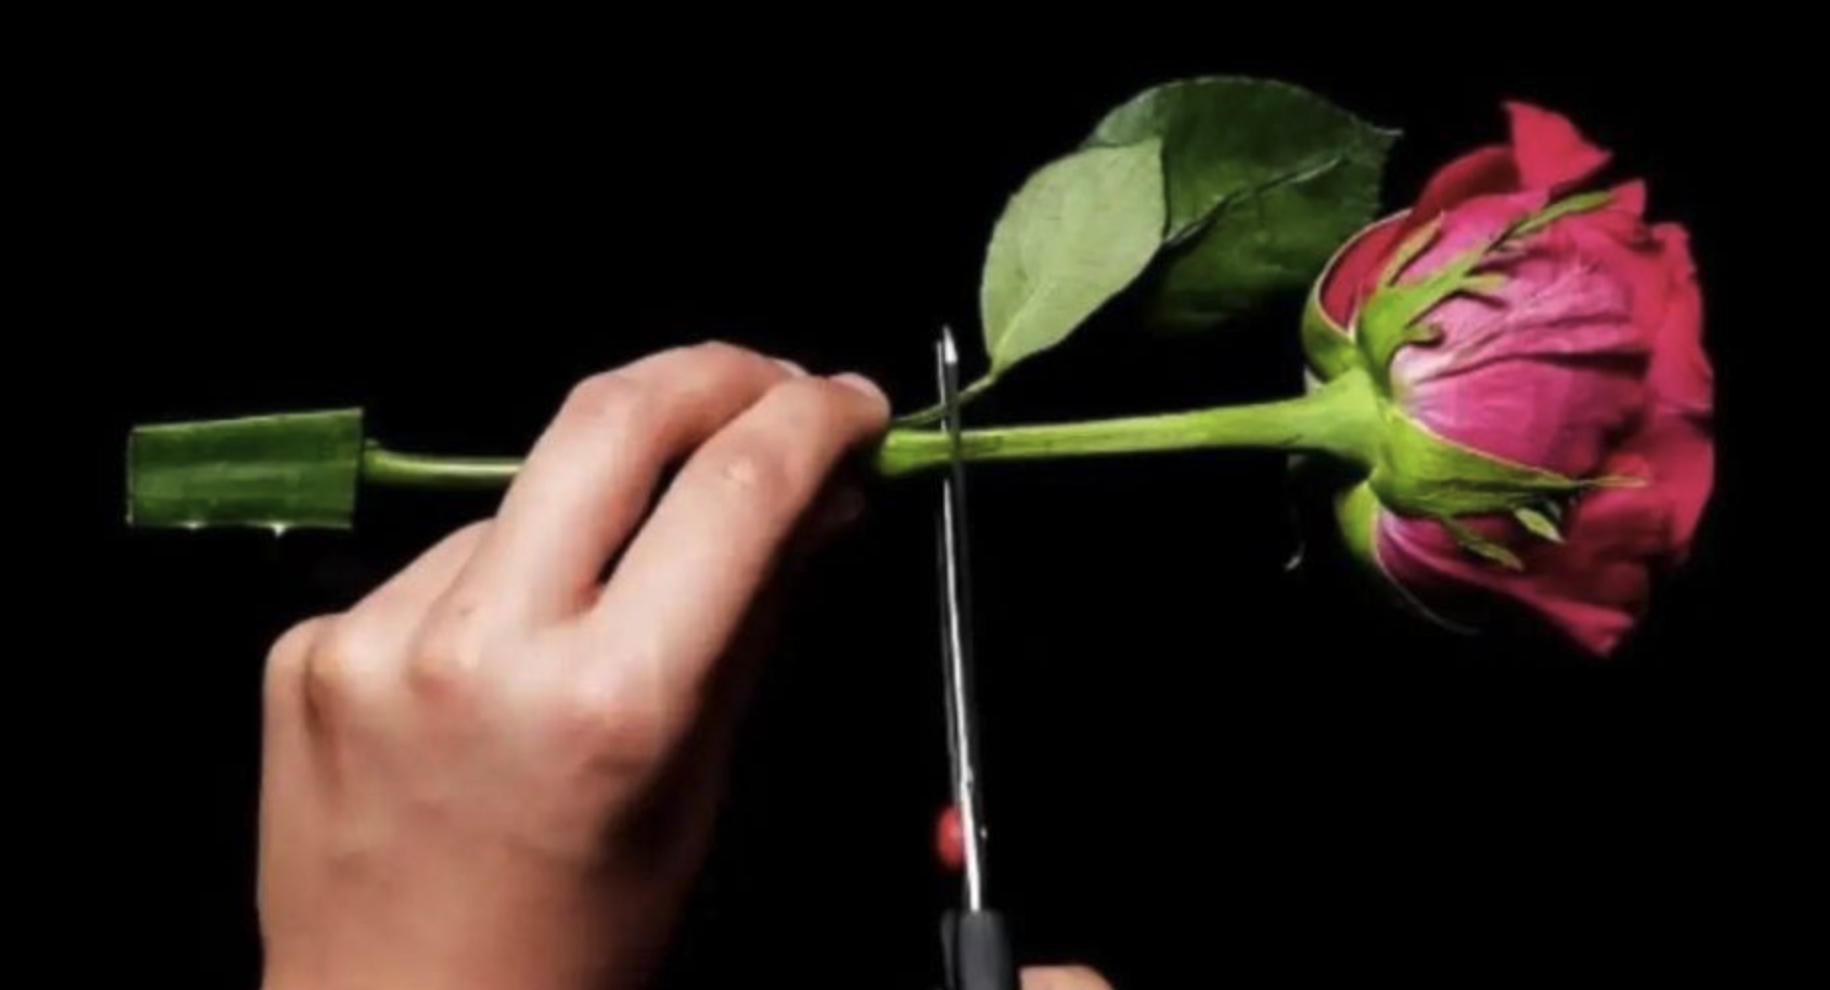 Inserting a rose stem into an aloe vera leaf: it’s the nursery’s secret method